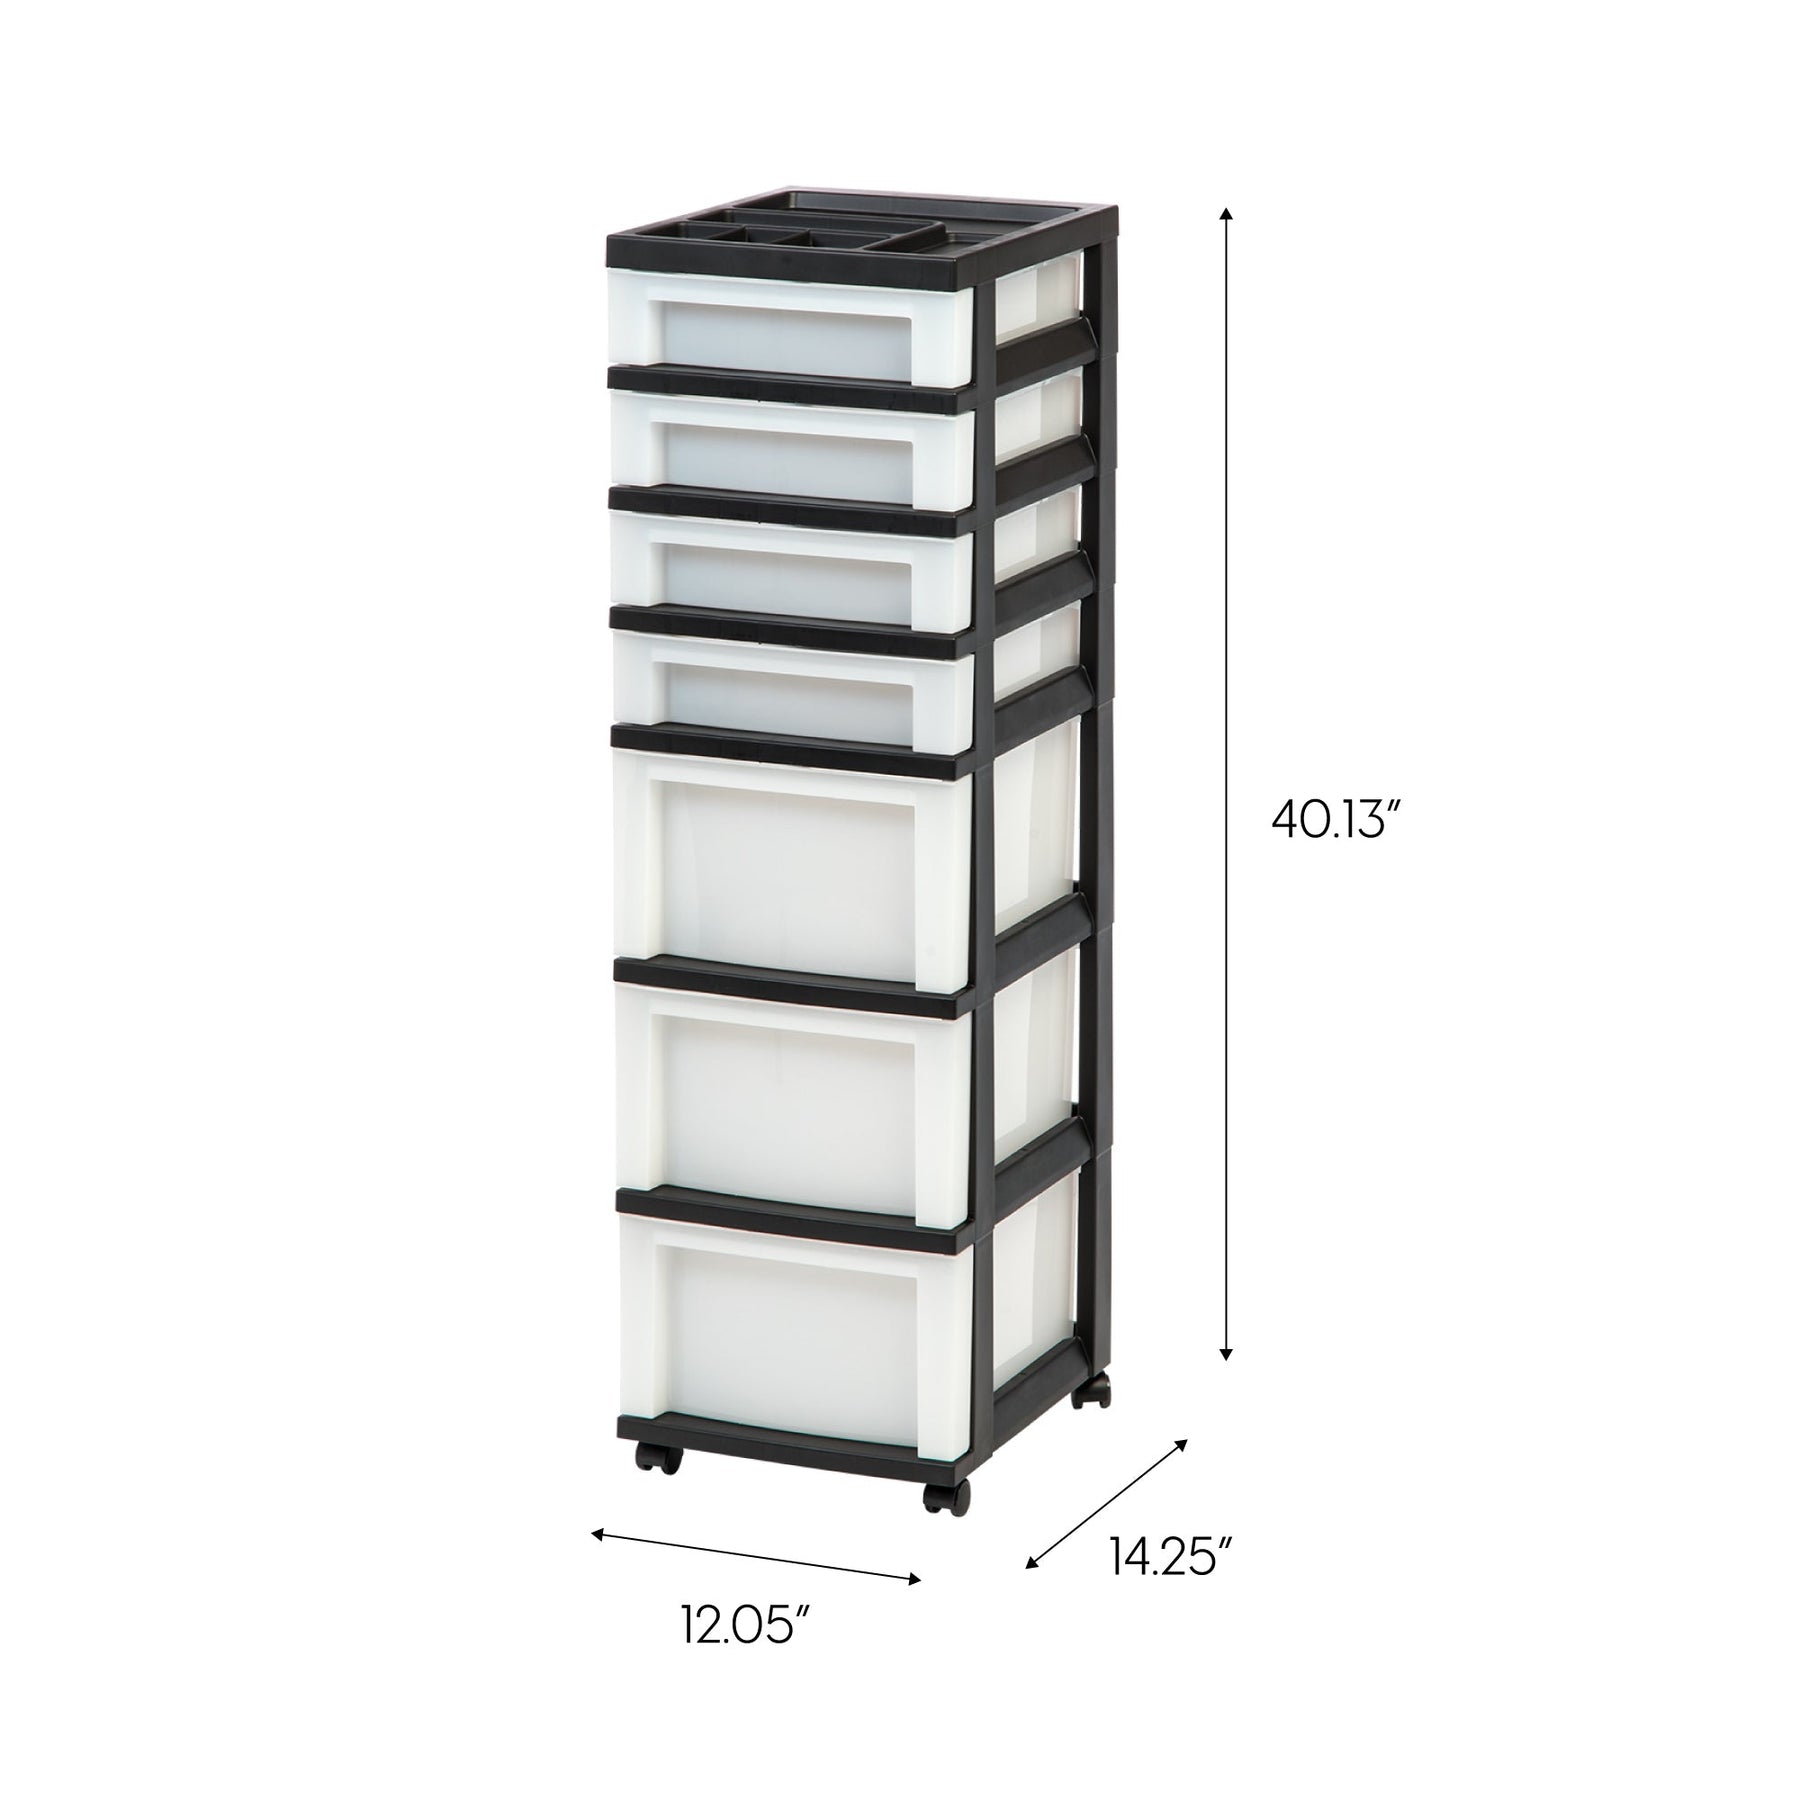 IRIS White 5-Drawer Storage Cart With Organizer Top